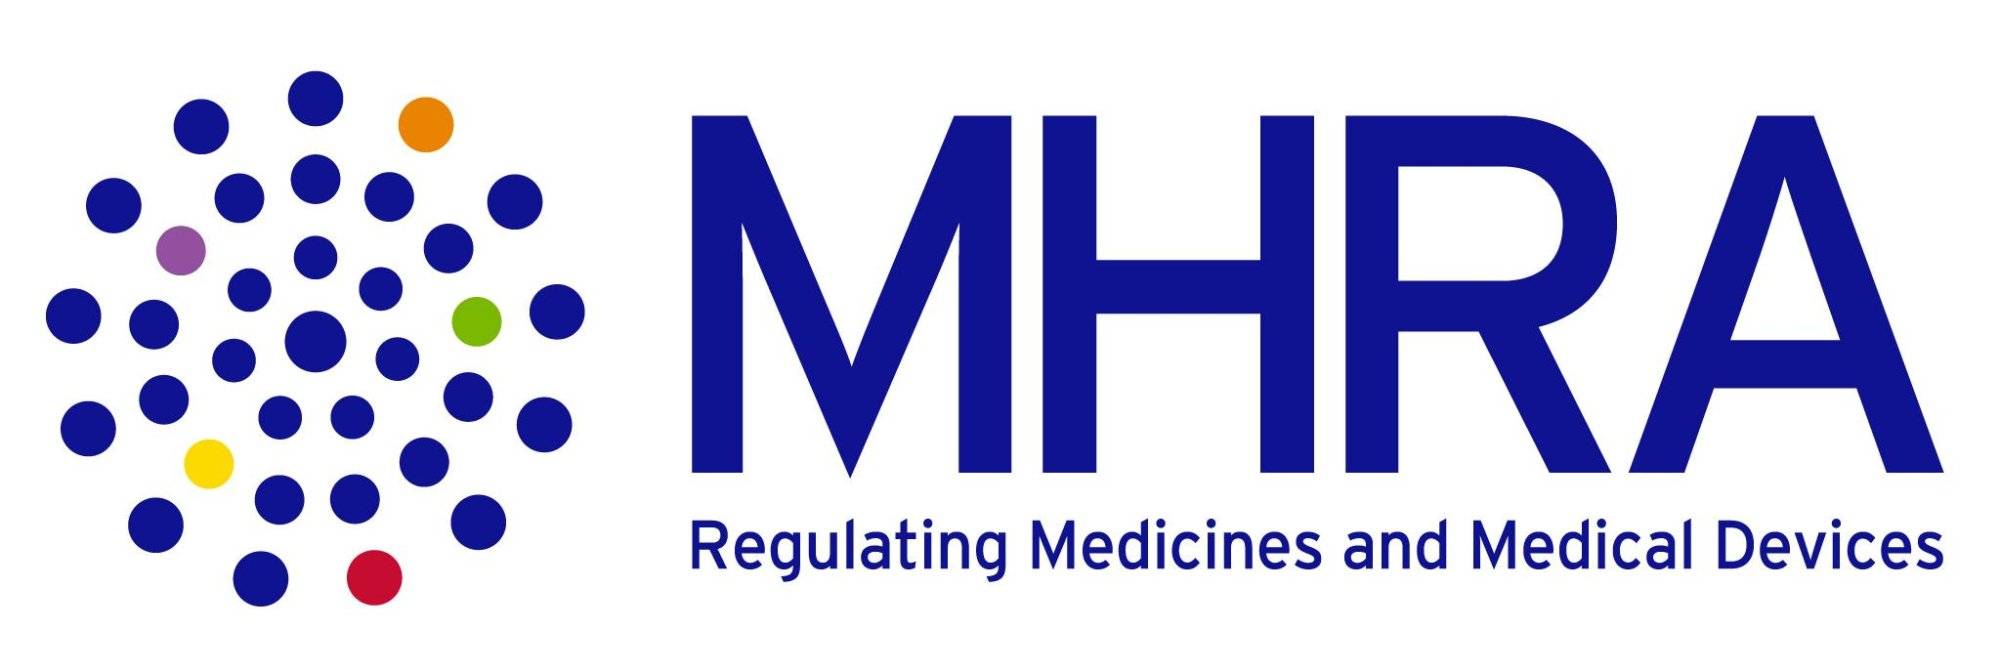 MHRA Logo 1